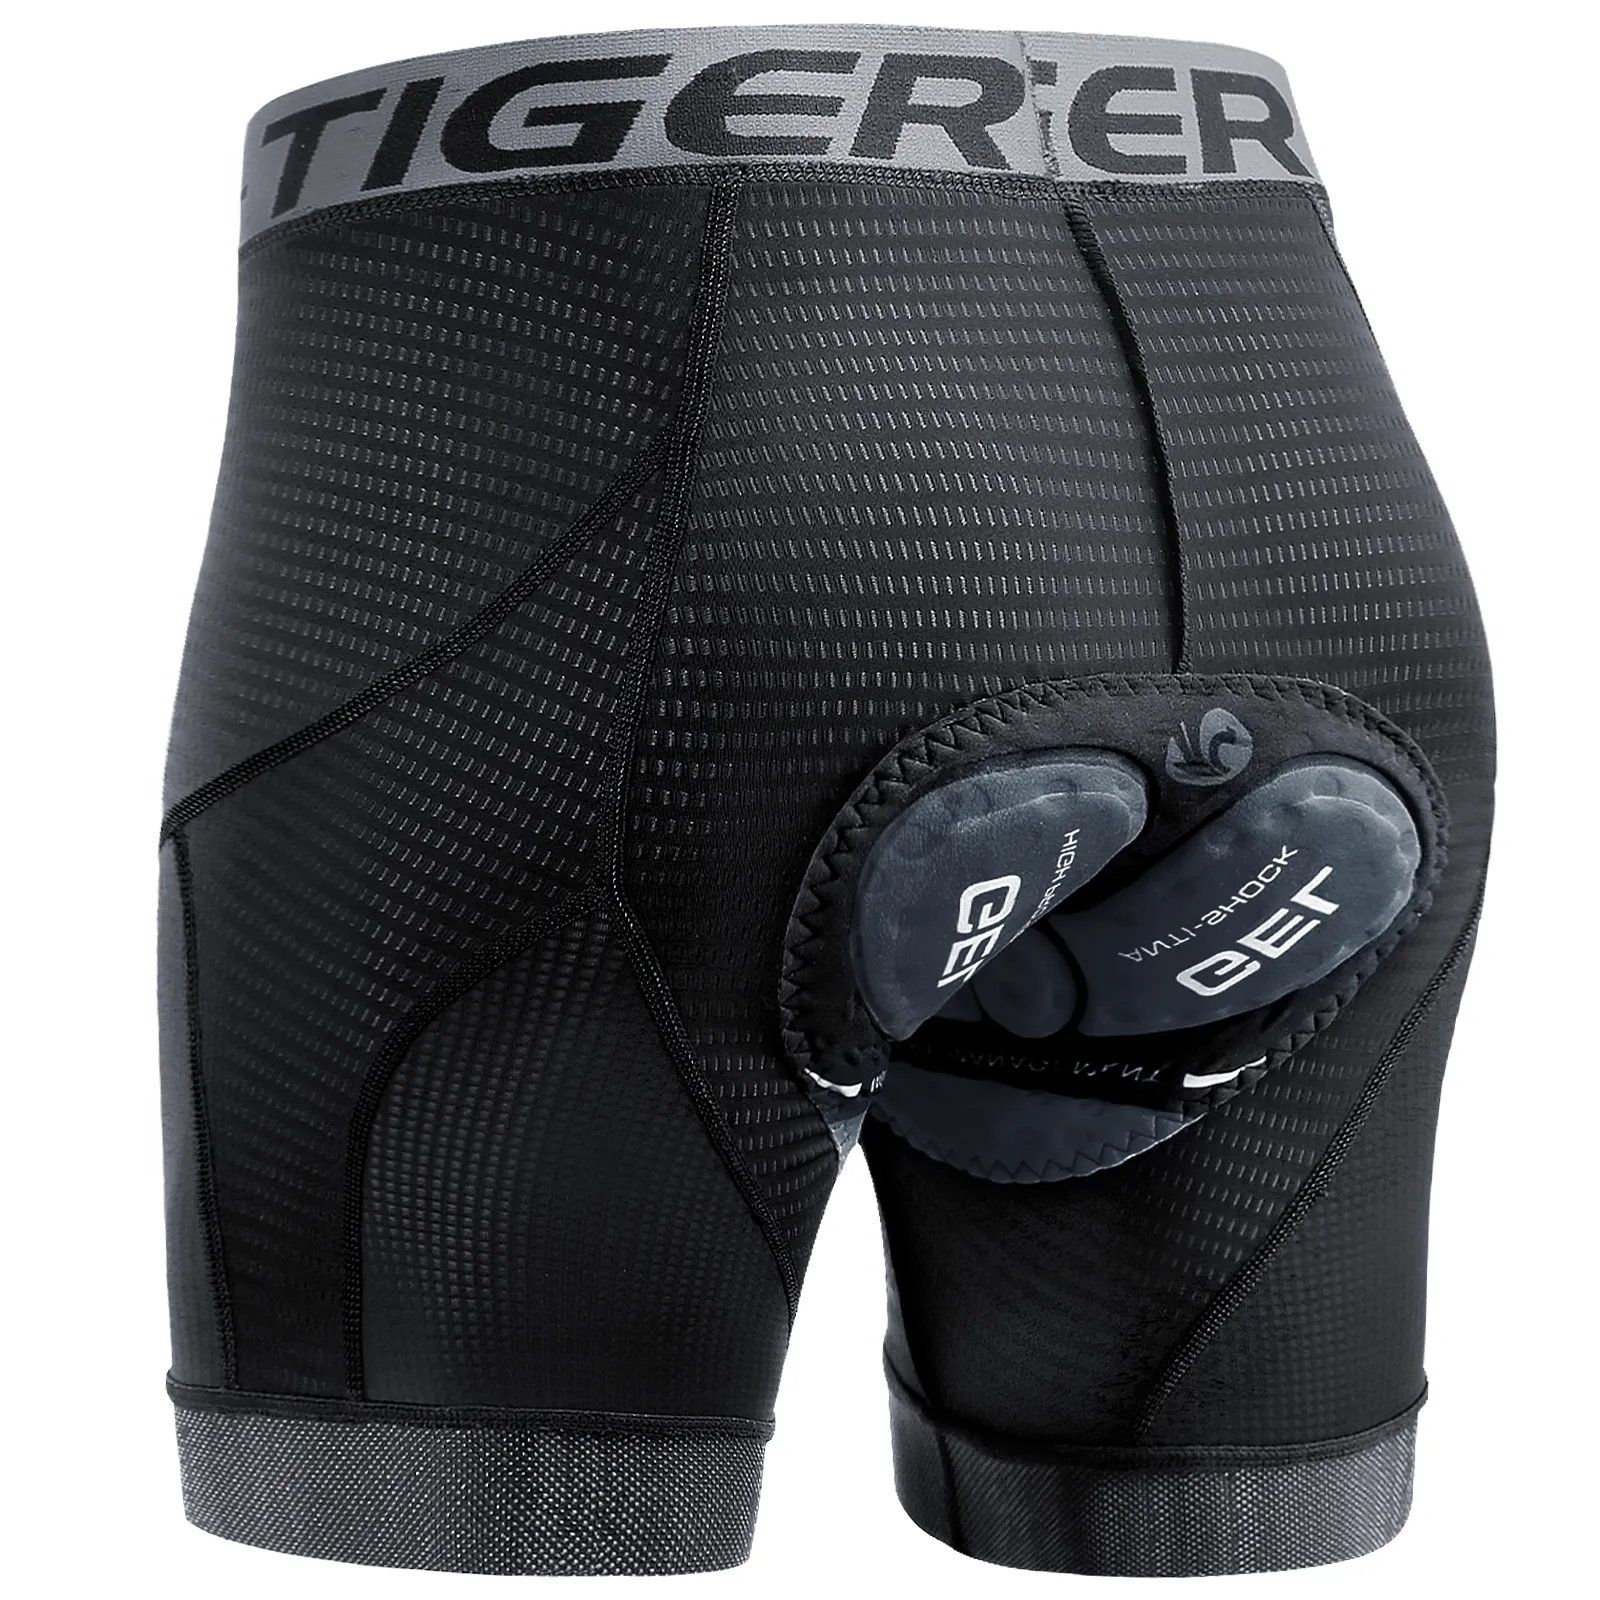 Cykling underkläder XTIGER Mäns Cycling Underwear Shorts 5D Padded Sports Riding Bike Bicycle MTB Liner Shorts With Antislip Leg Grips 230306